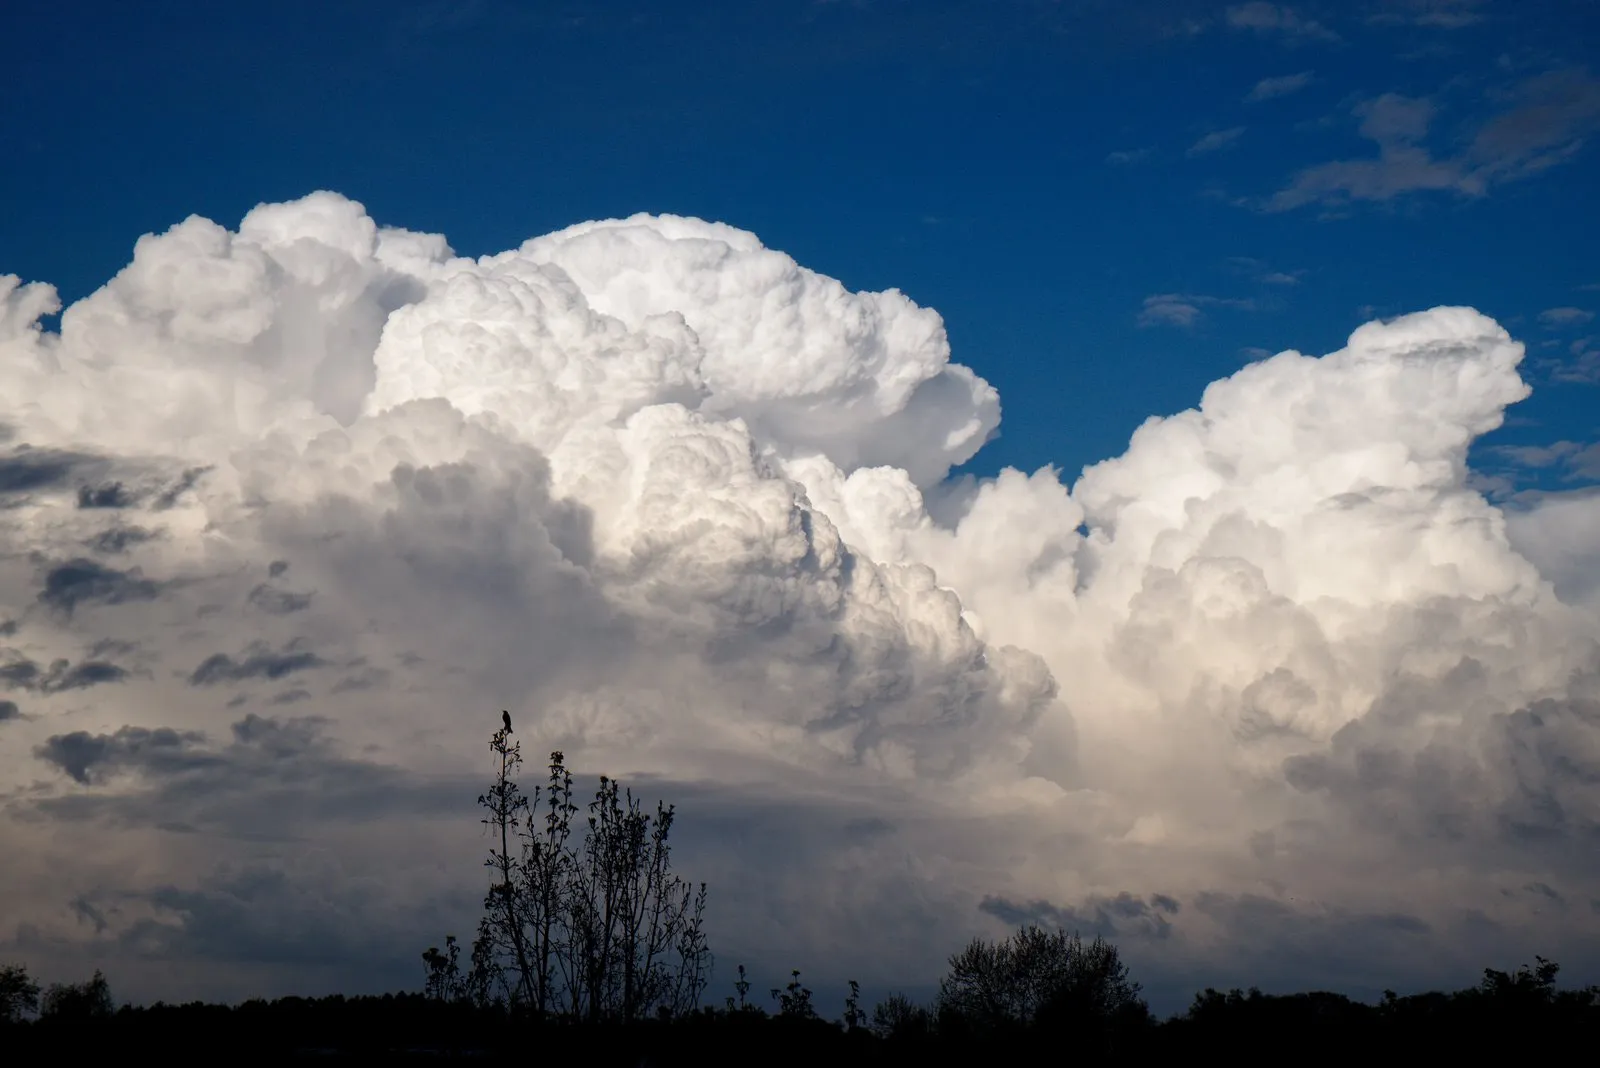 Photo showing: 500px provided description: Blogpost: www.jenseitsderfenster.de/2015/04/28/wolkenberge/

CC-BY Faldrian / jenseitsderfenster.de [#sky ,#clouds ,#storm ,#konstanz ,#wolken ,#himmel ,#wolkenberge]